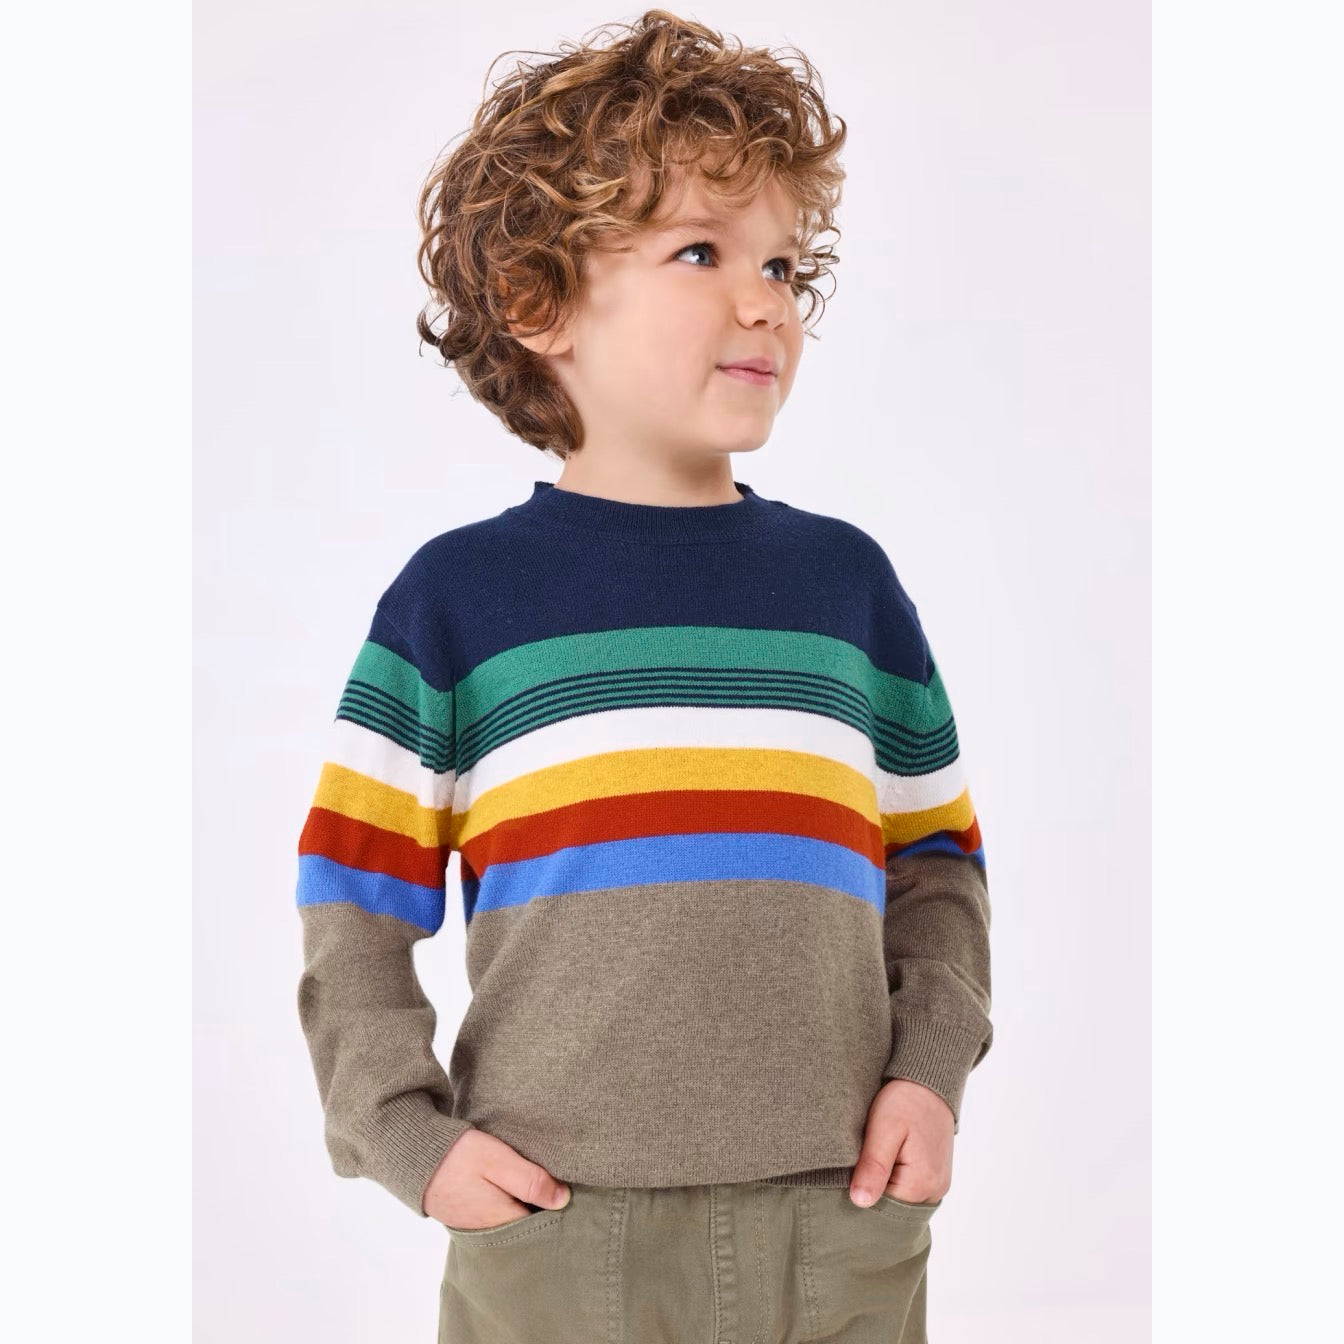 Mayoral Boy Stripes Sweater 4324 Clothing 4YRS / Multi,5YRS / Multi,6YRS / Multi,7YRS / Multi,8YRS / Multi,9YRS / Multi